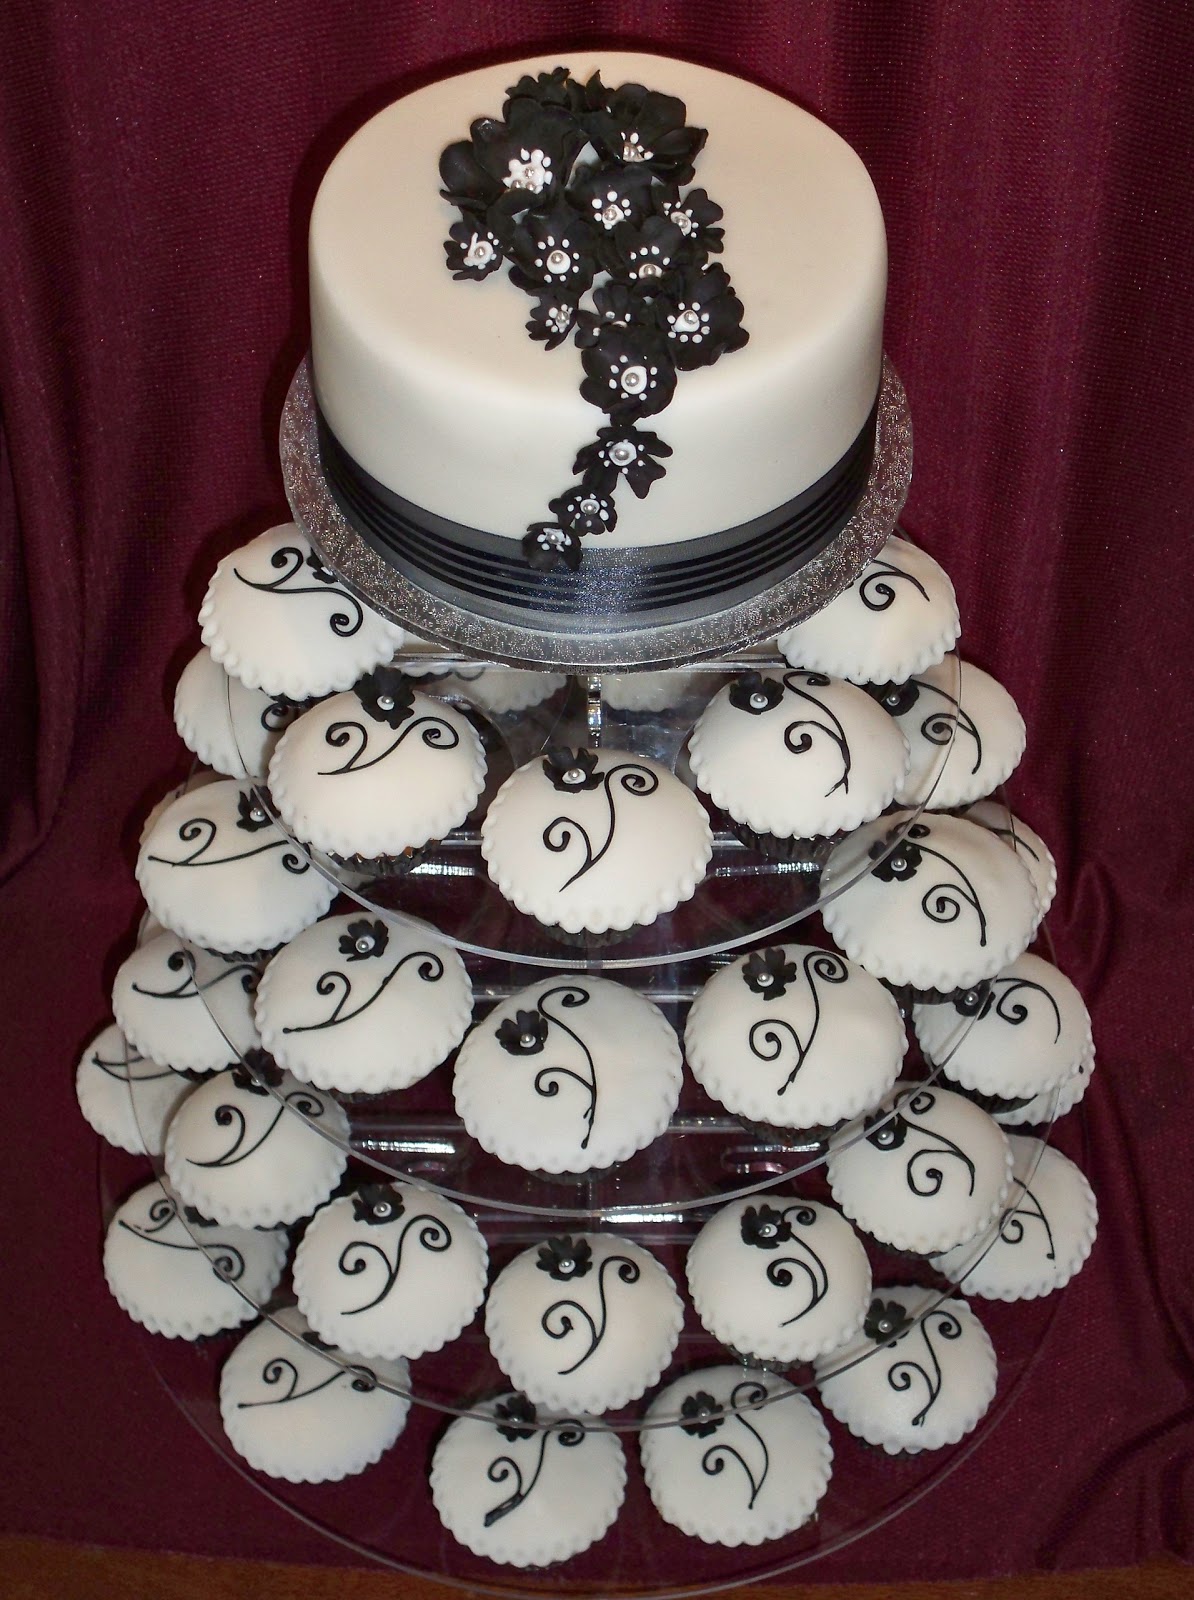 Black and White Wedding Cupcakes